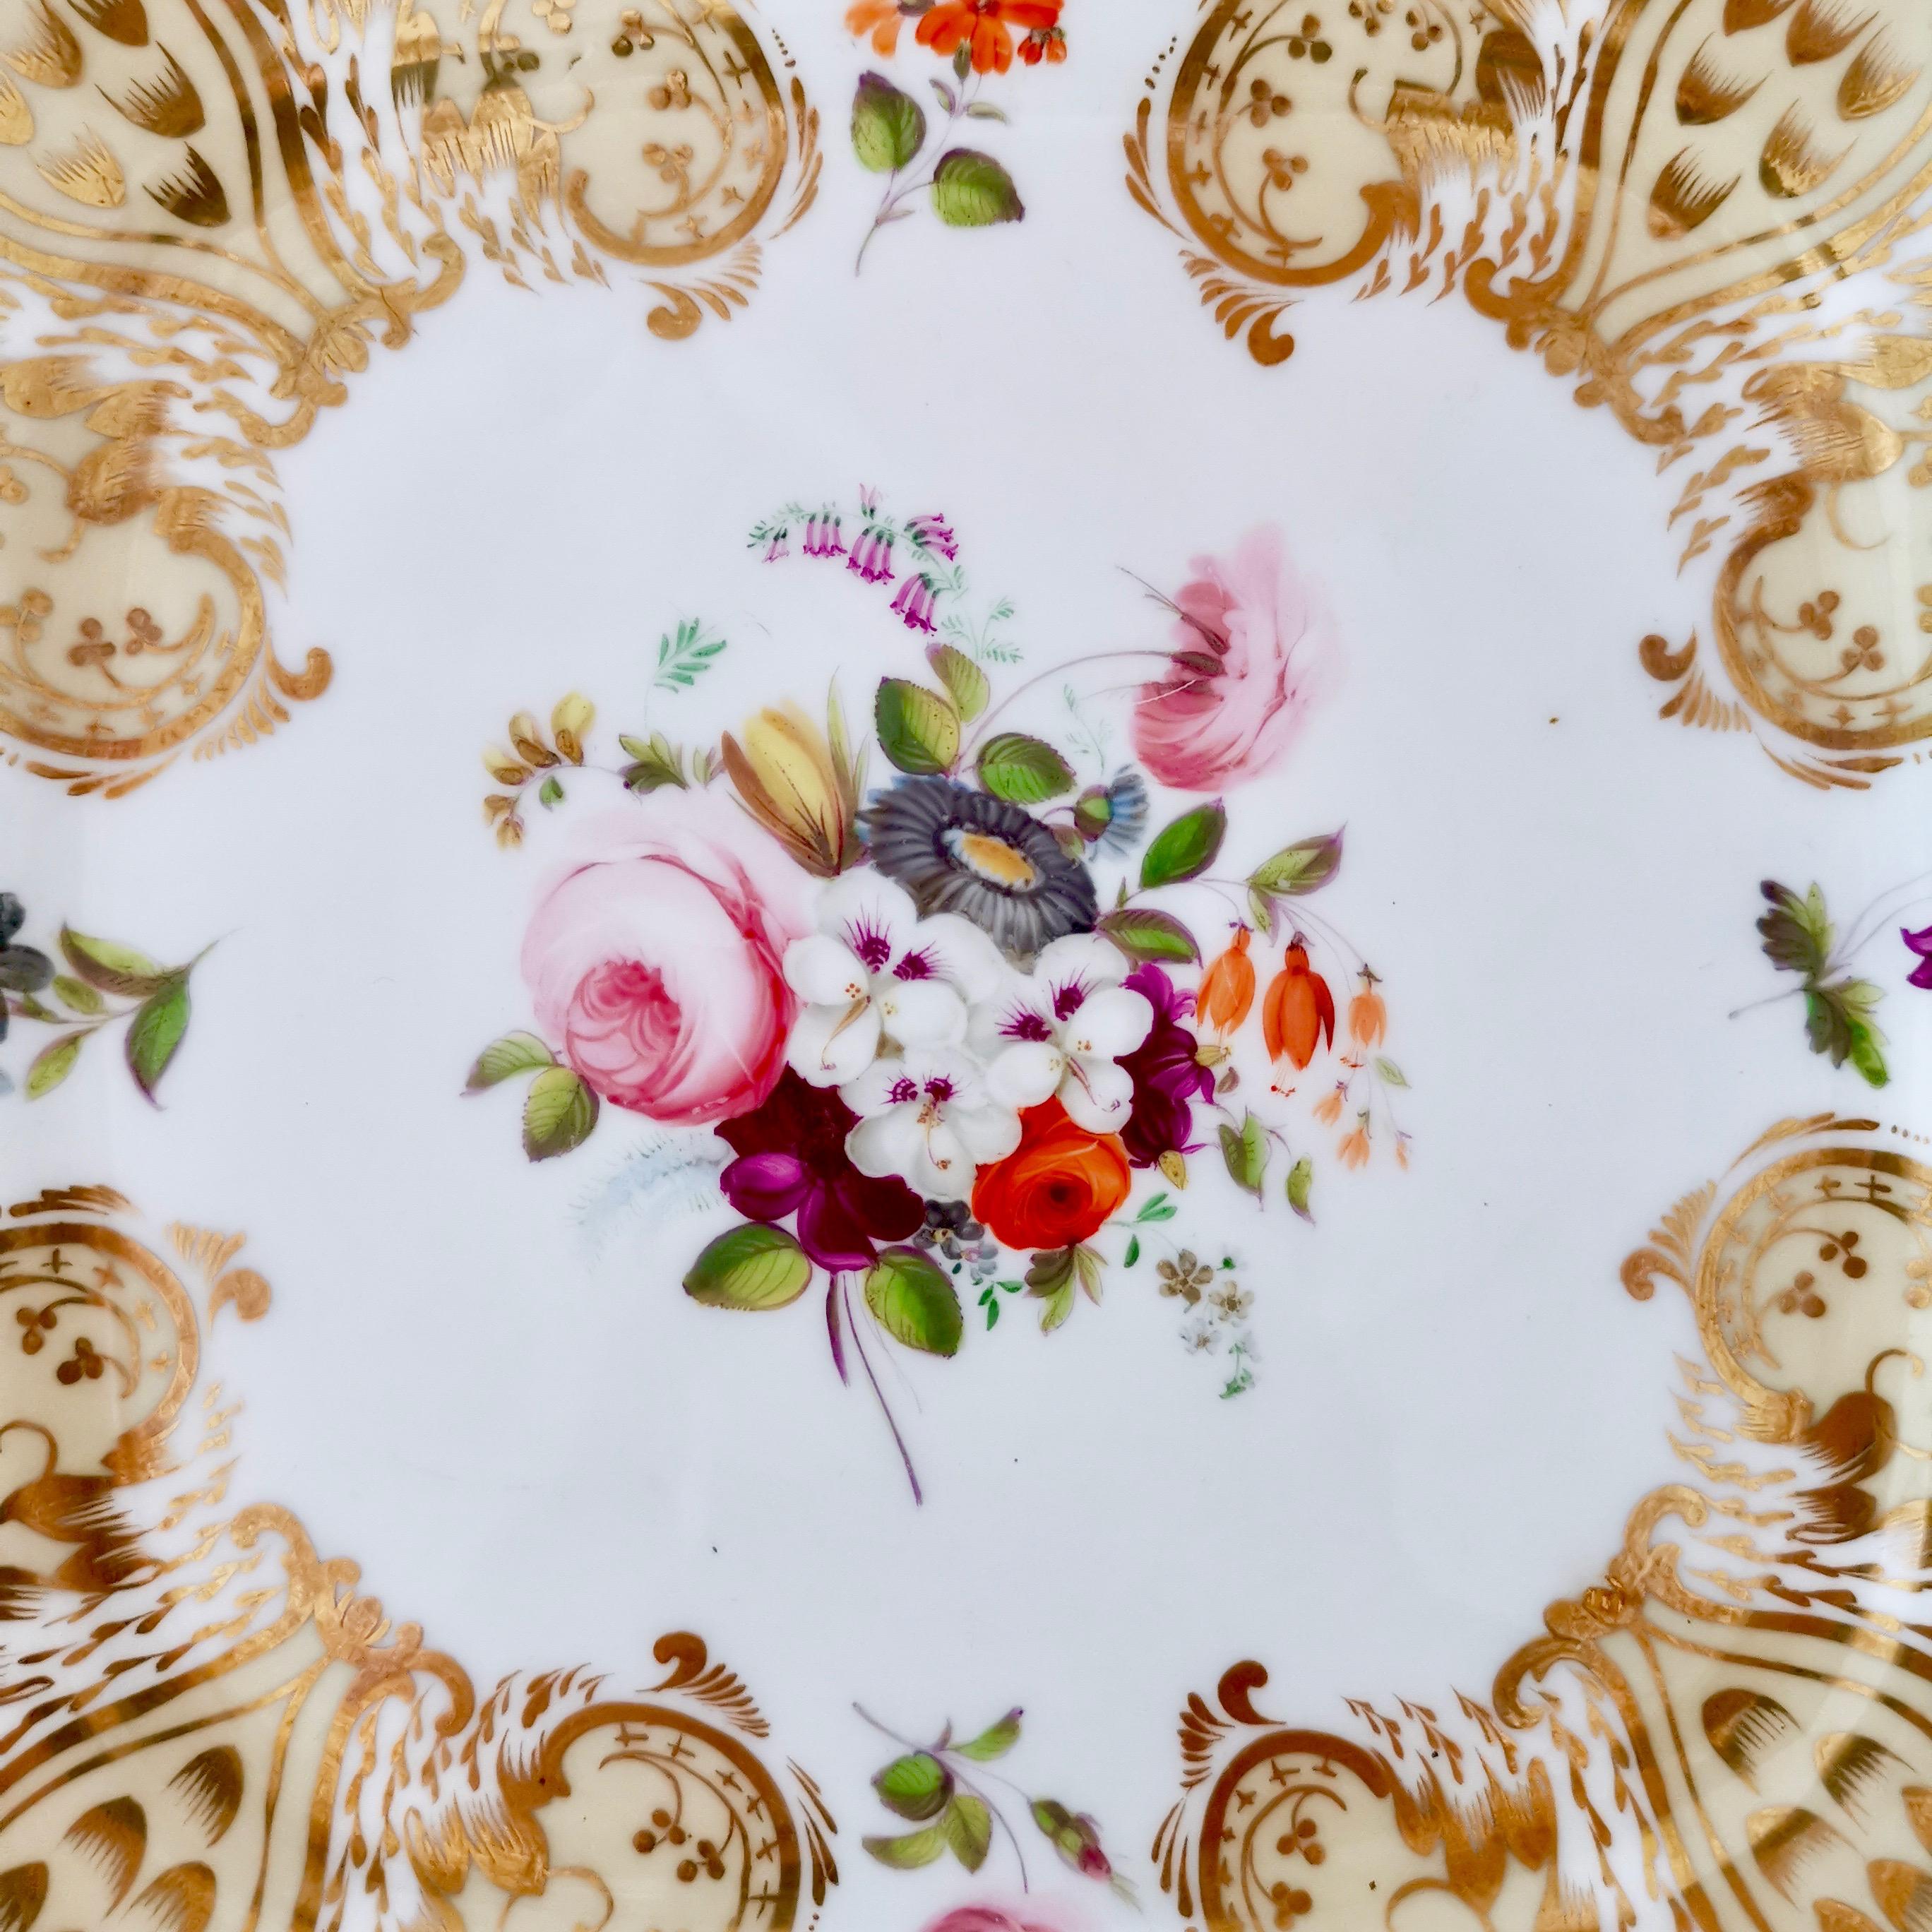 Victorian Coalport Porcelain Cake Plate, Beige and Gilt, Flowers by Thomas Dixon, 1837